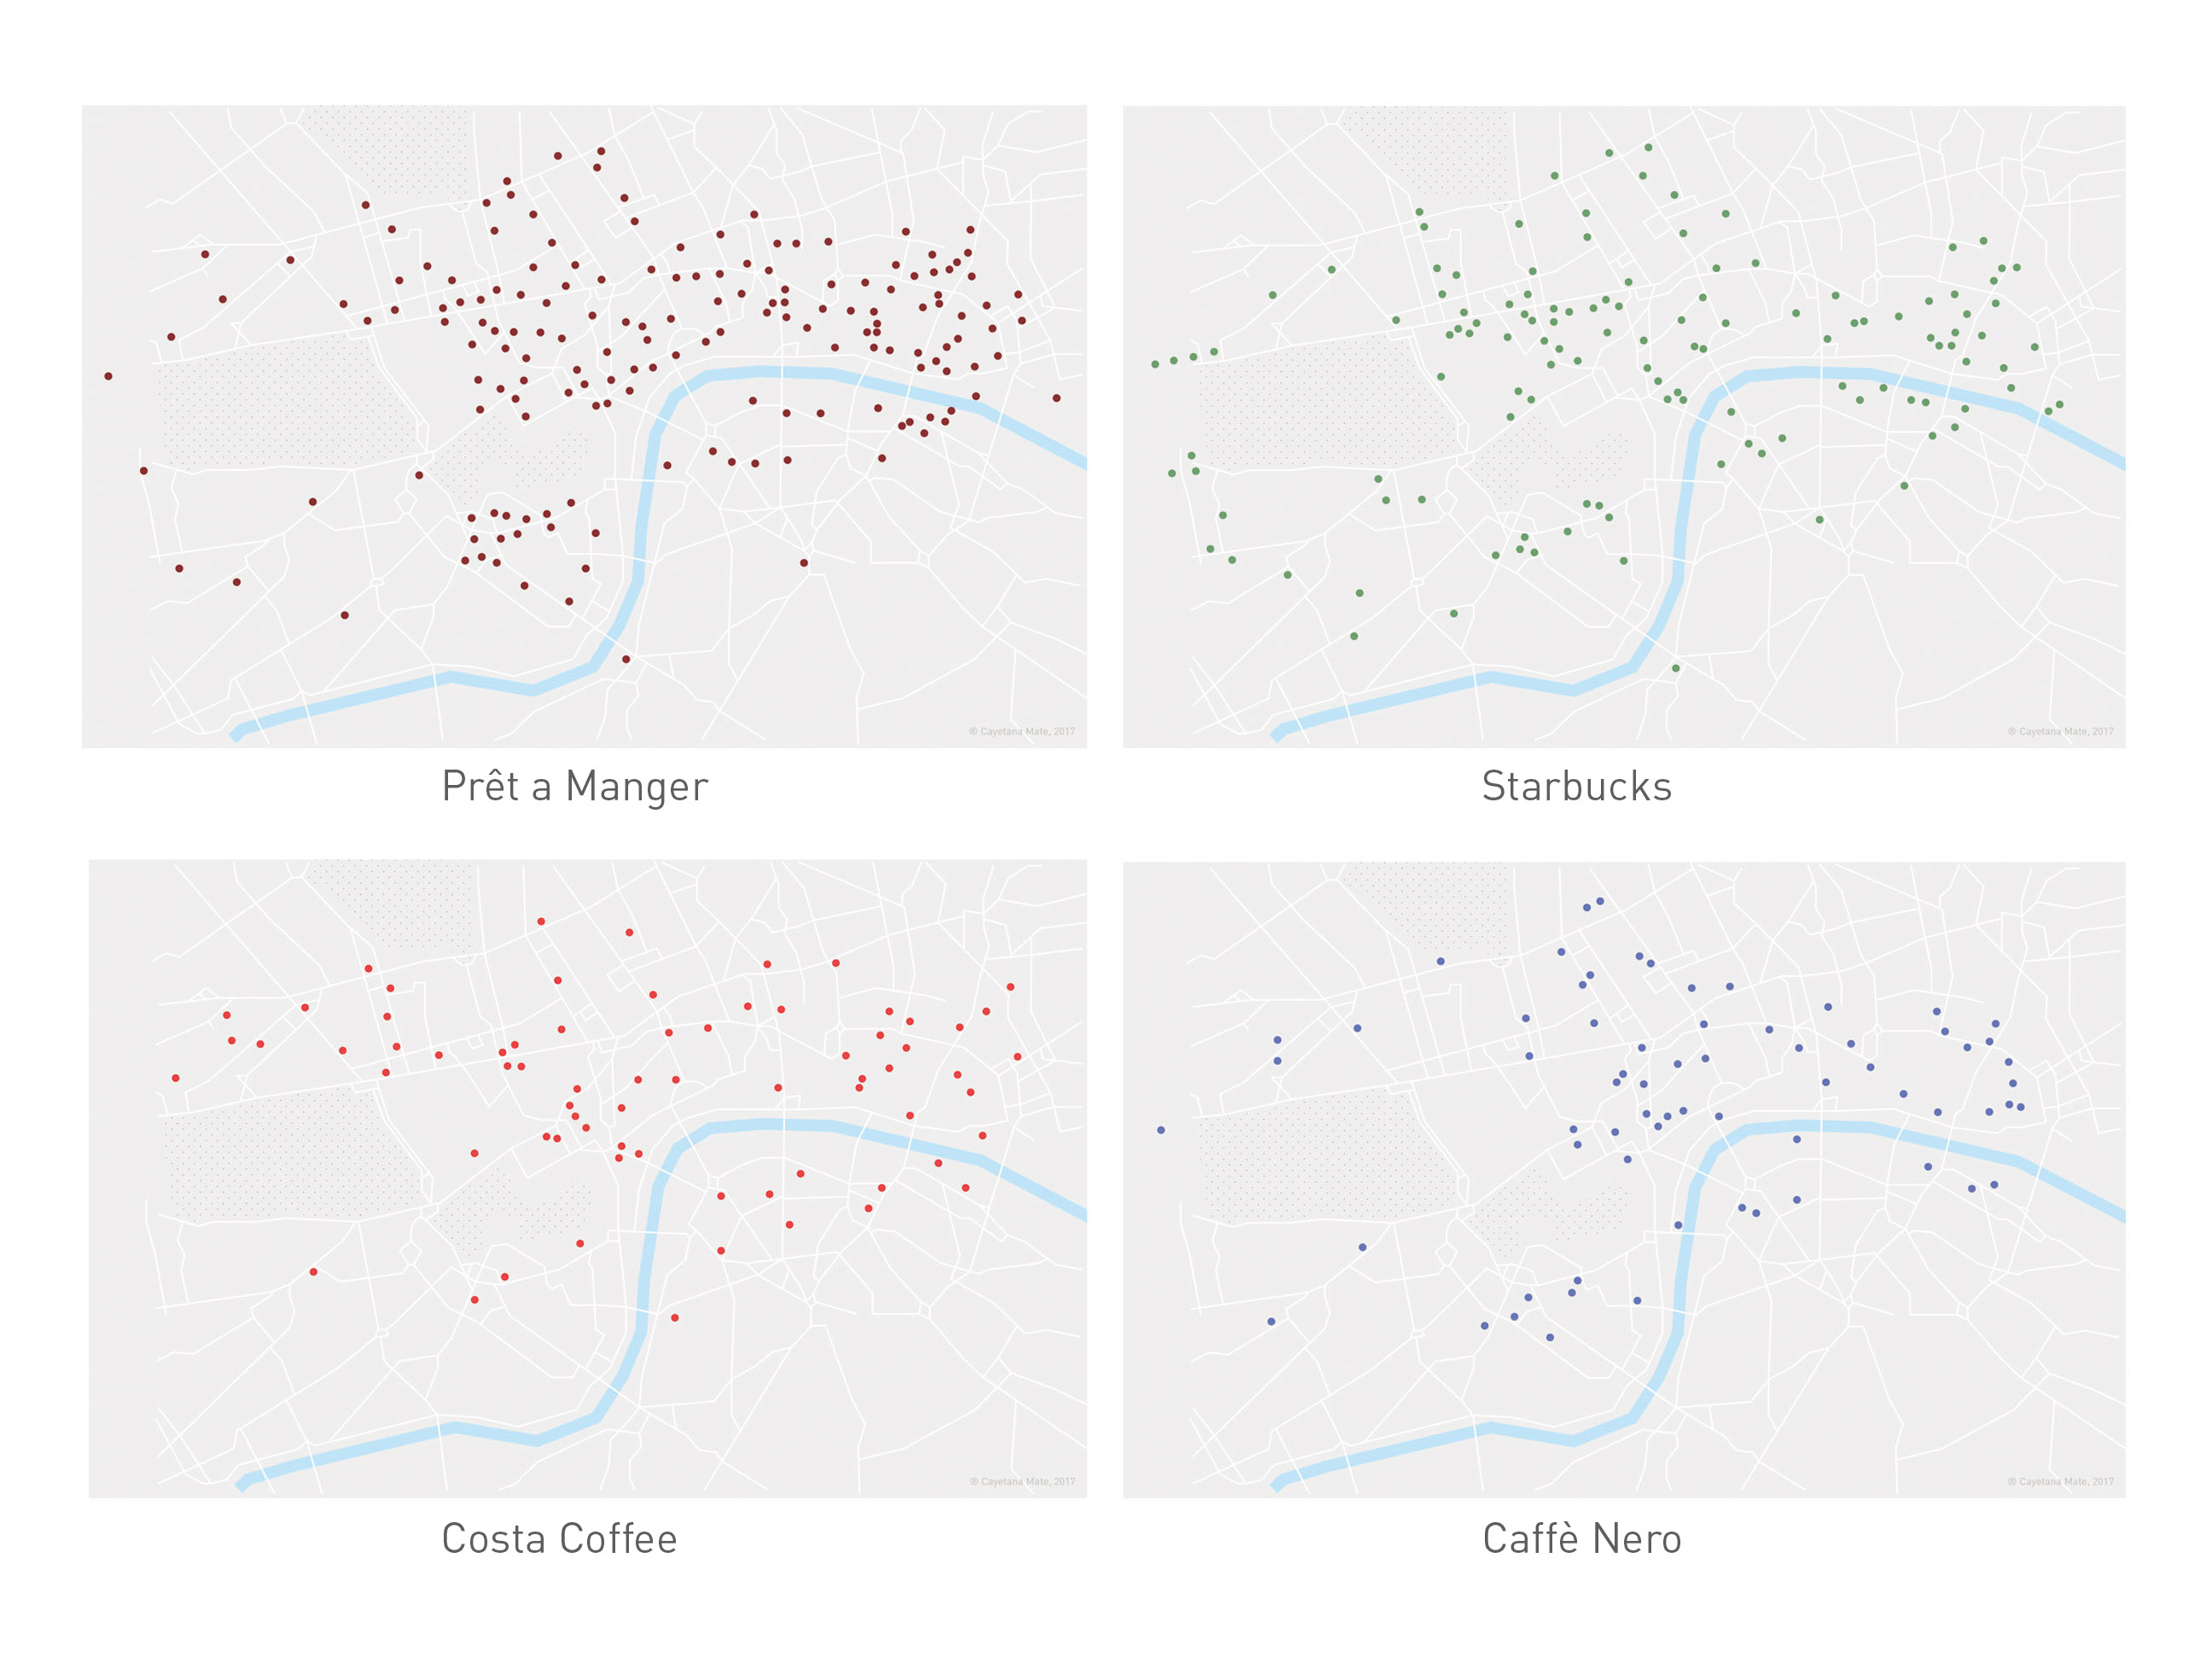 london coffee data sivualization comparison pret a manger